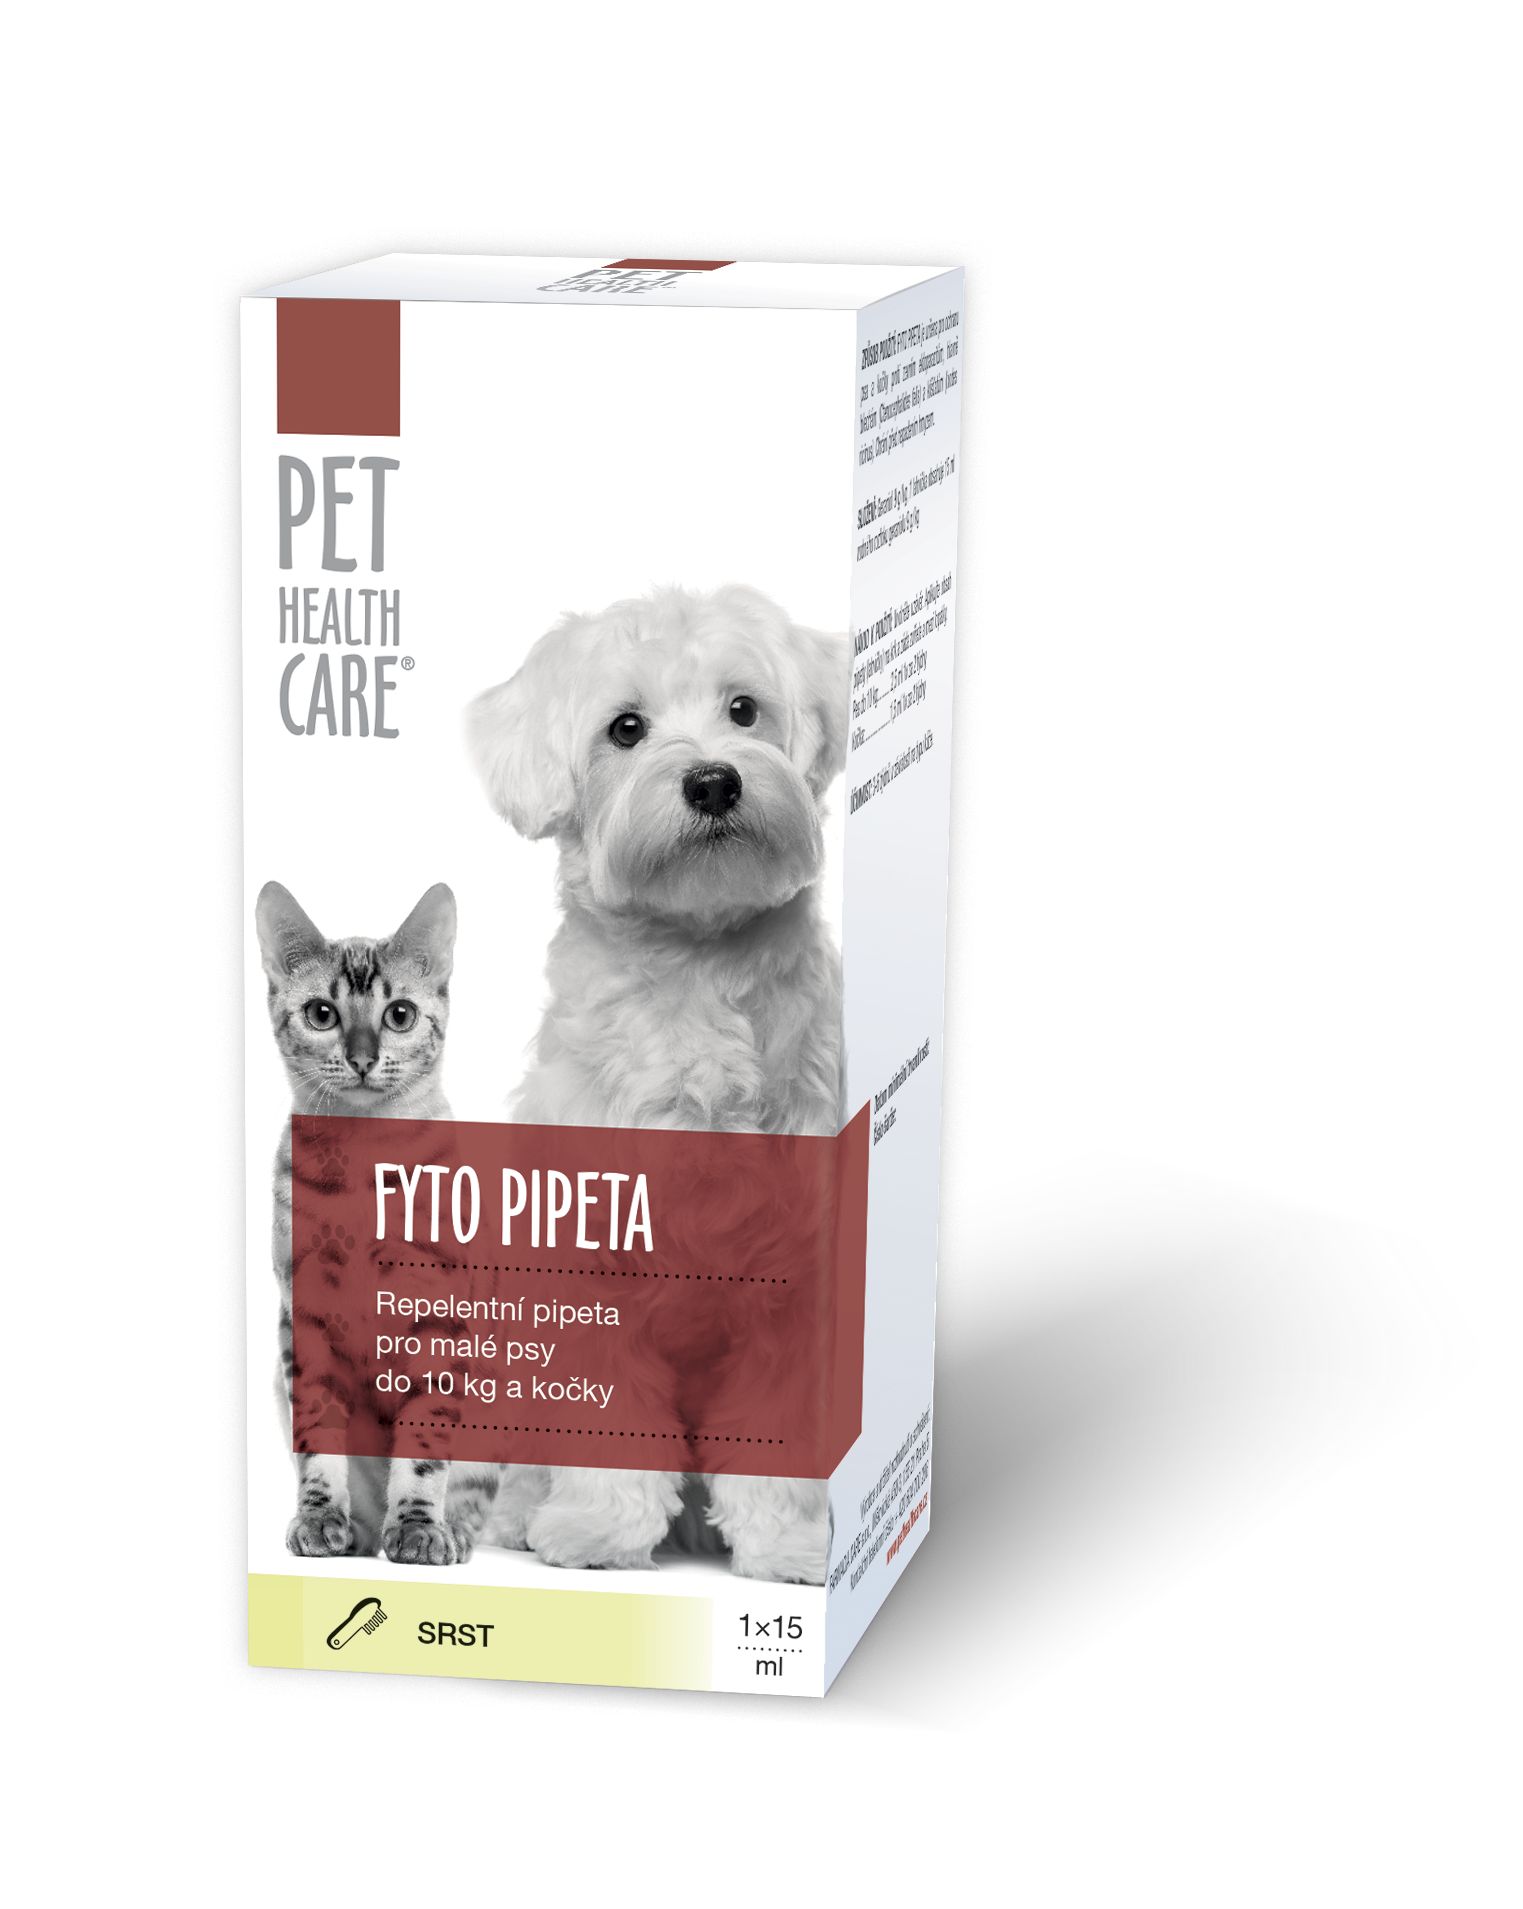 Pet health care Fytopipeta pes 10 kg kočka 1x15 ml Pet health care